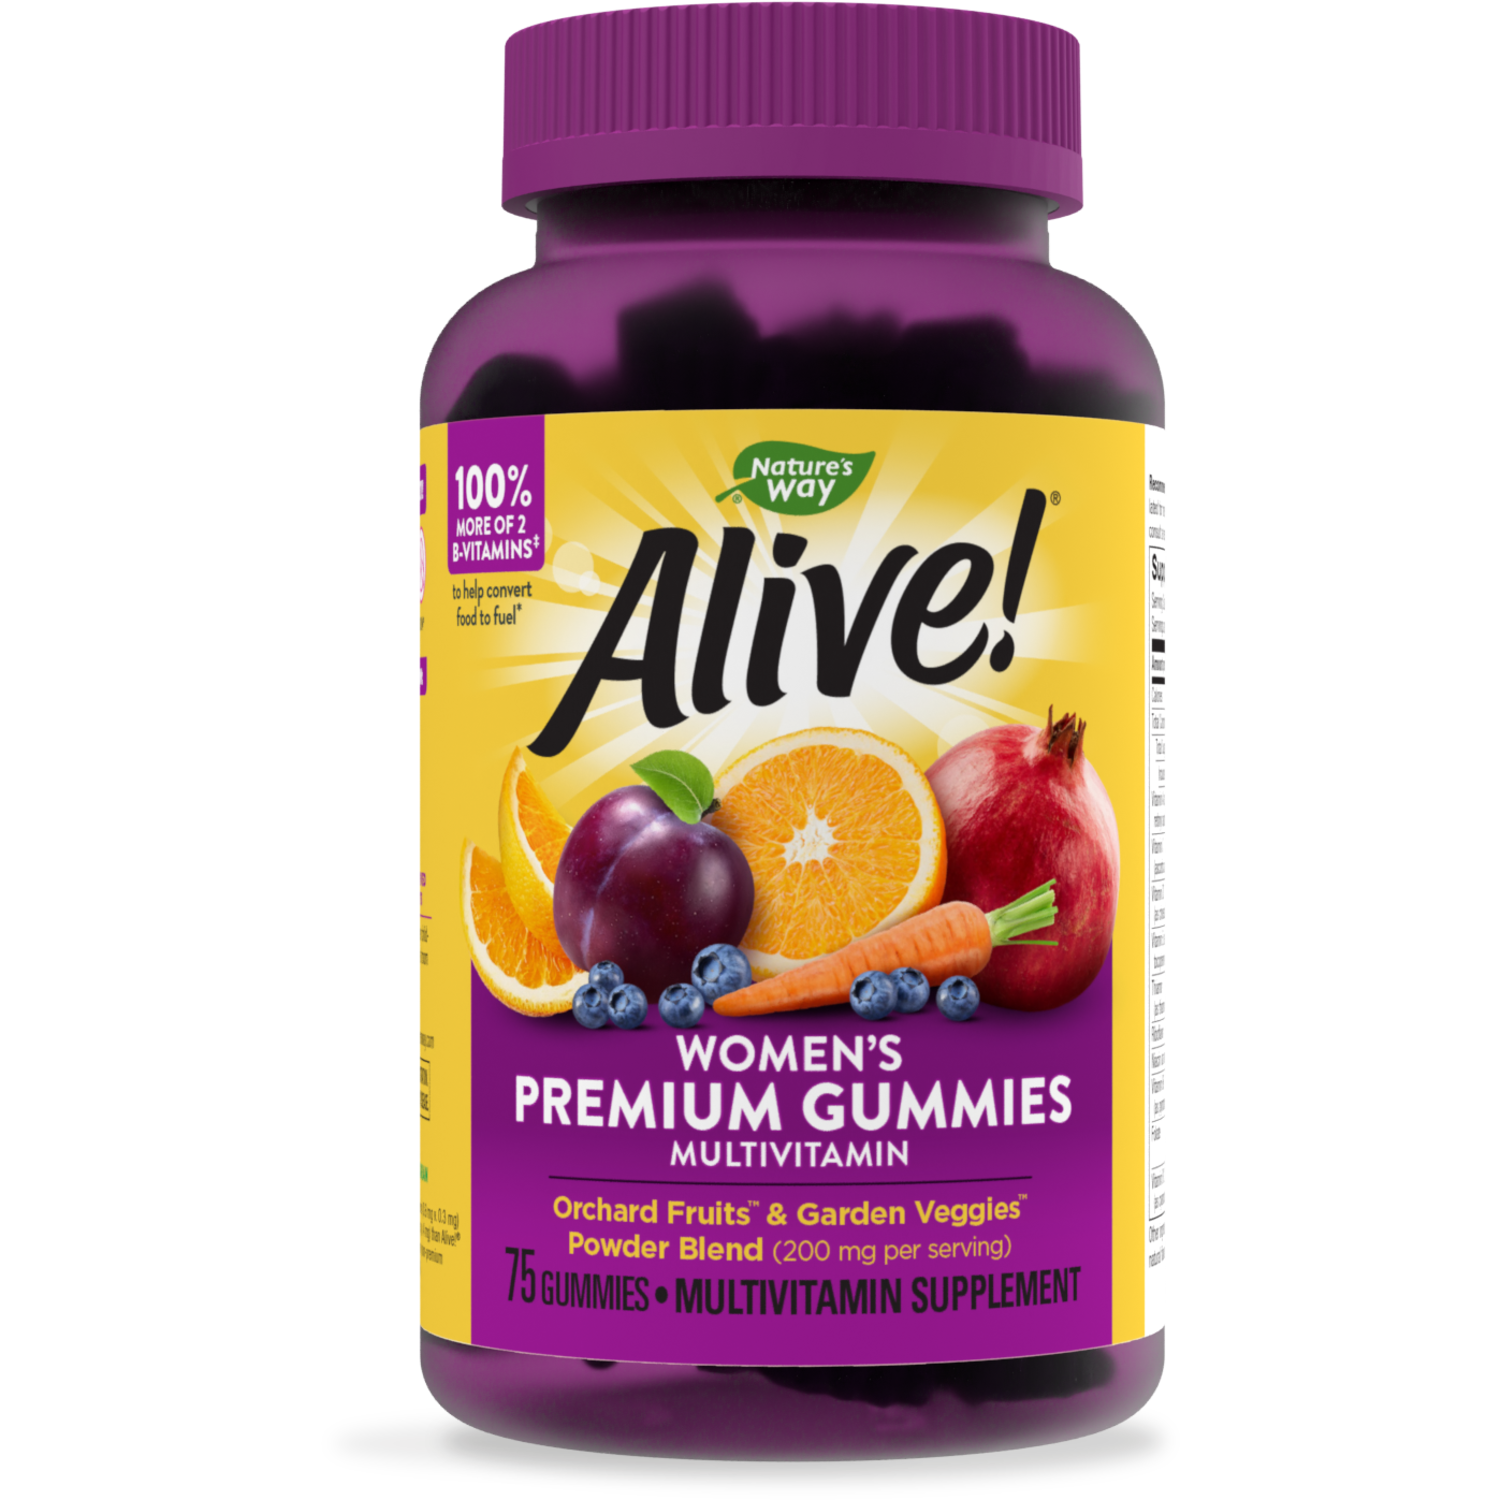 Nature's Way Alive! Women’s Premium Gummy Multivitamin, B-Vitamins, 75 Gummies - image 1 of 9